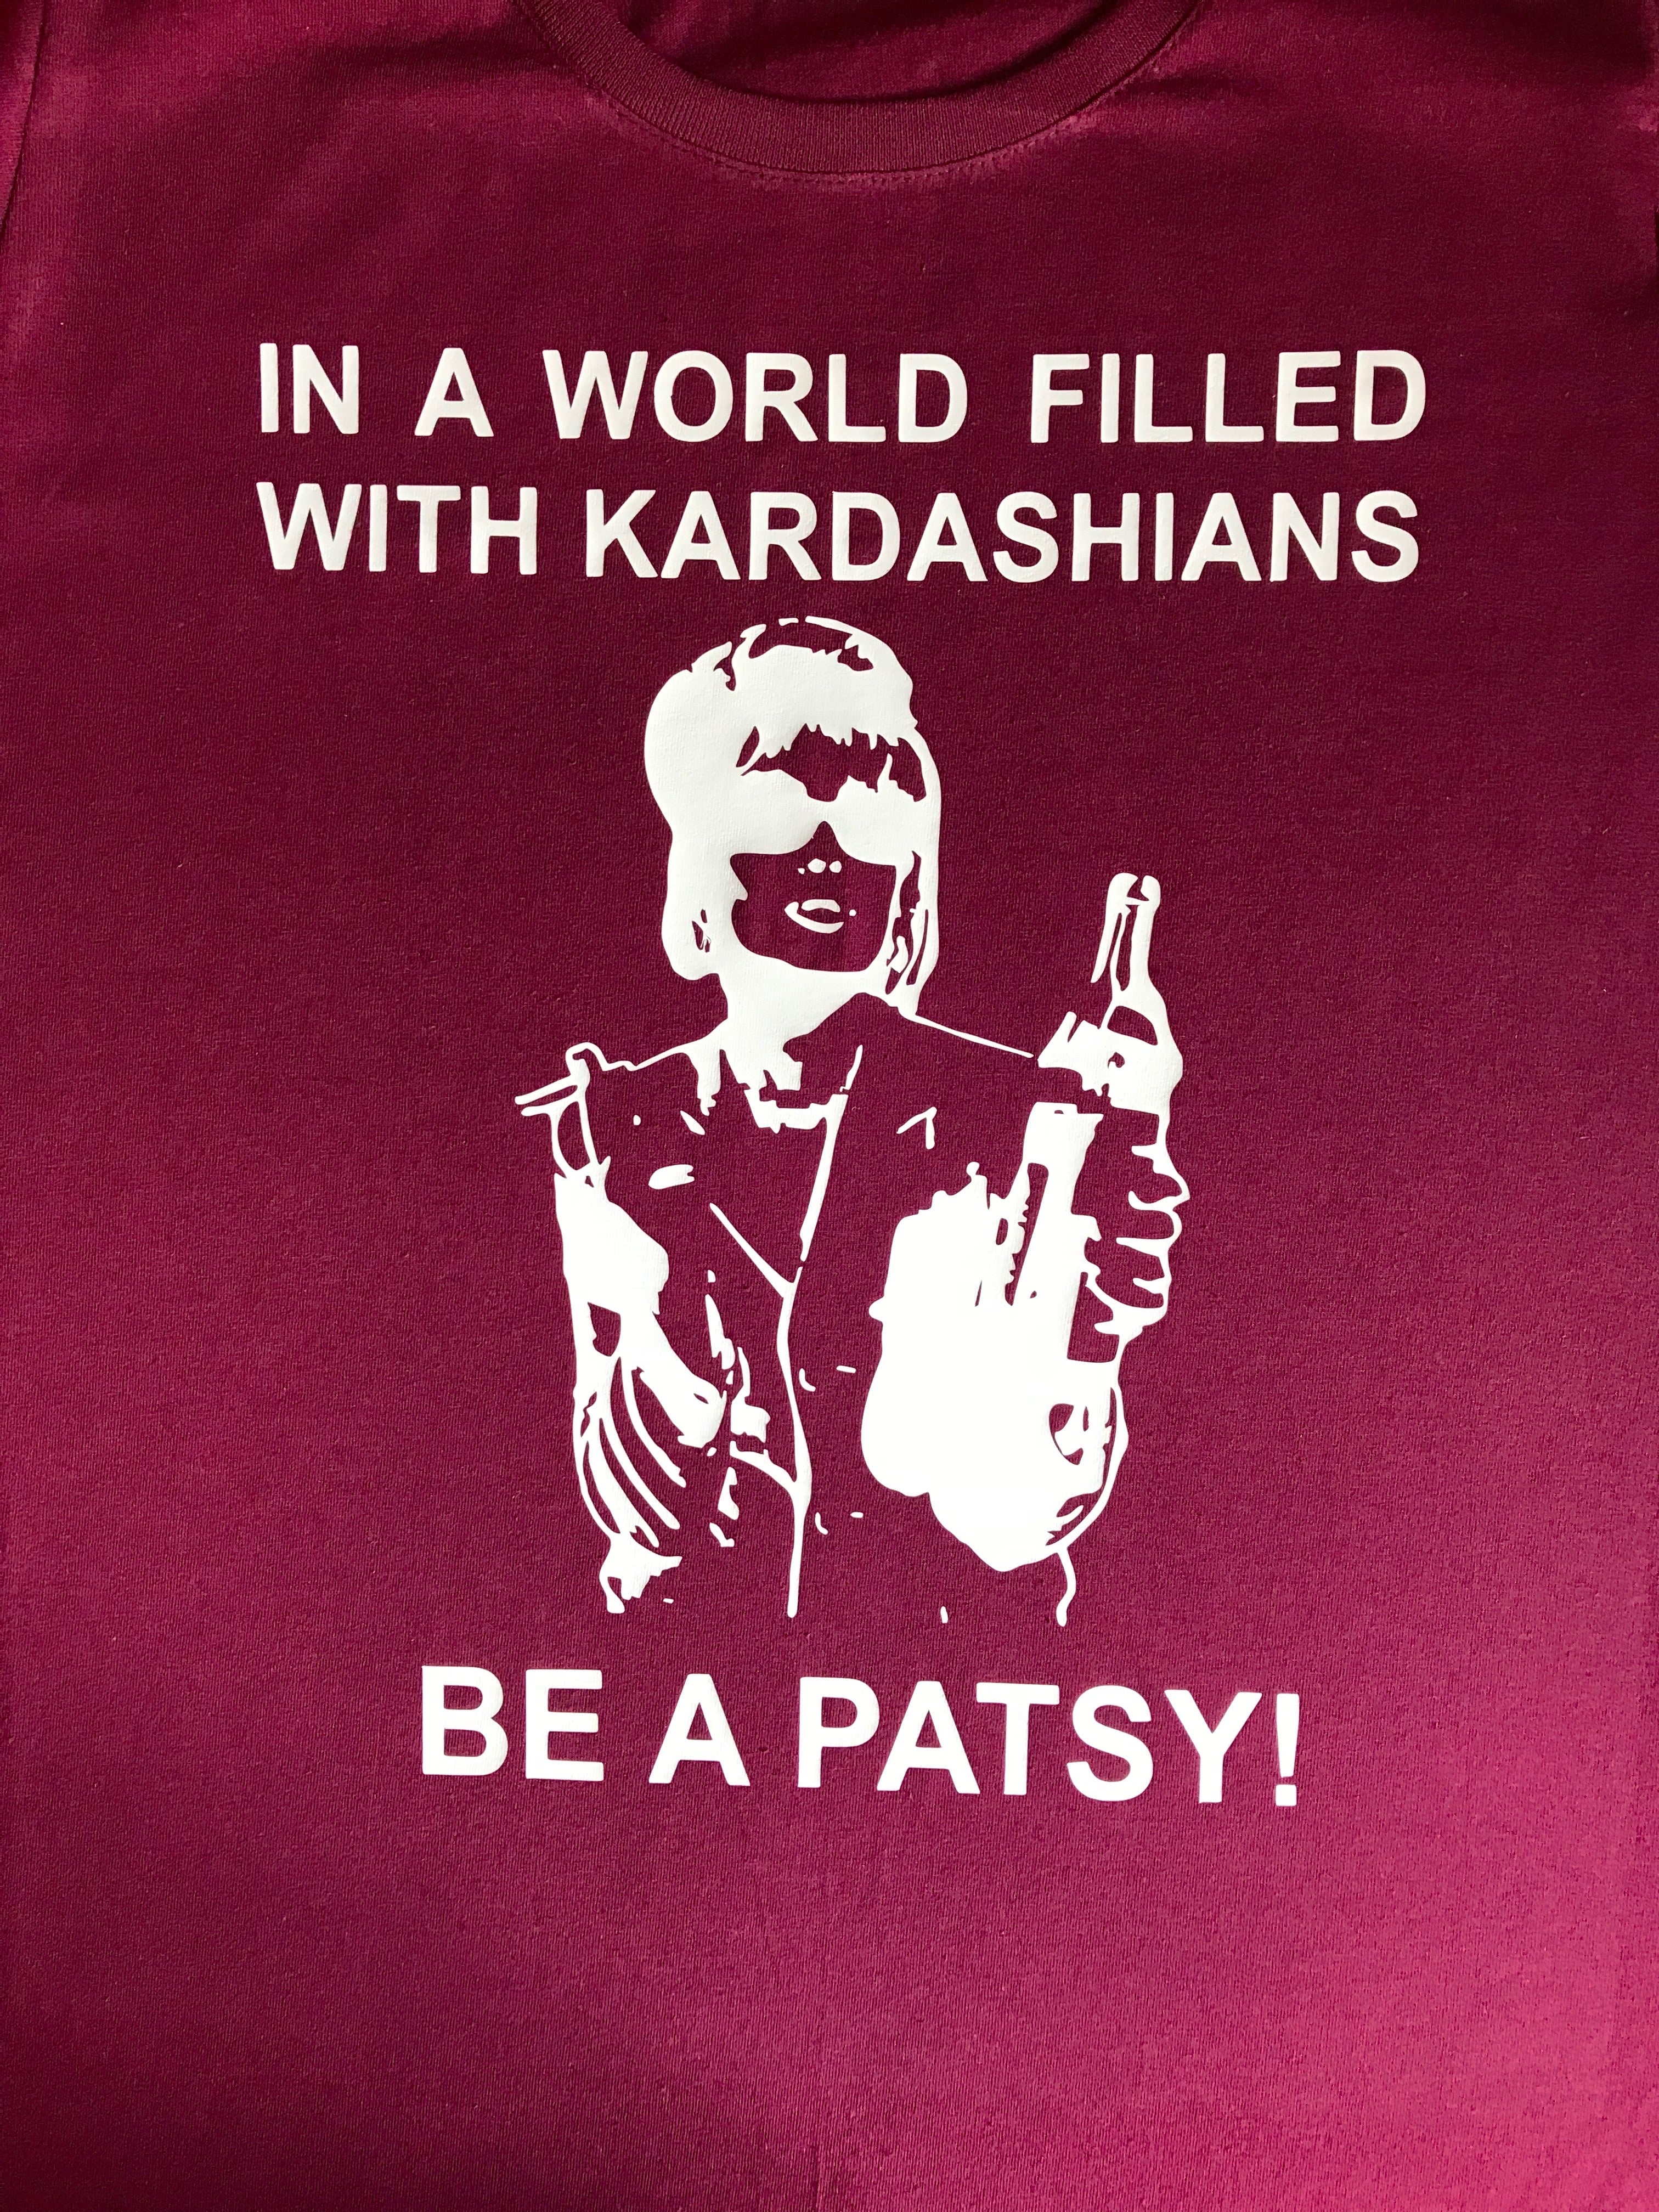 Be a Patsy absolutely fabulous T shirt / Hoodie-men woman T shirts-DiamondsKT